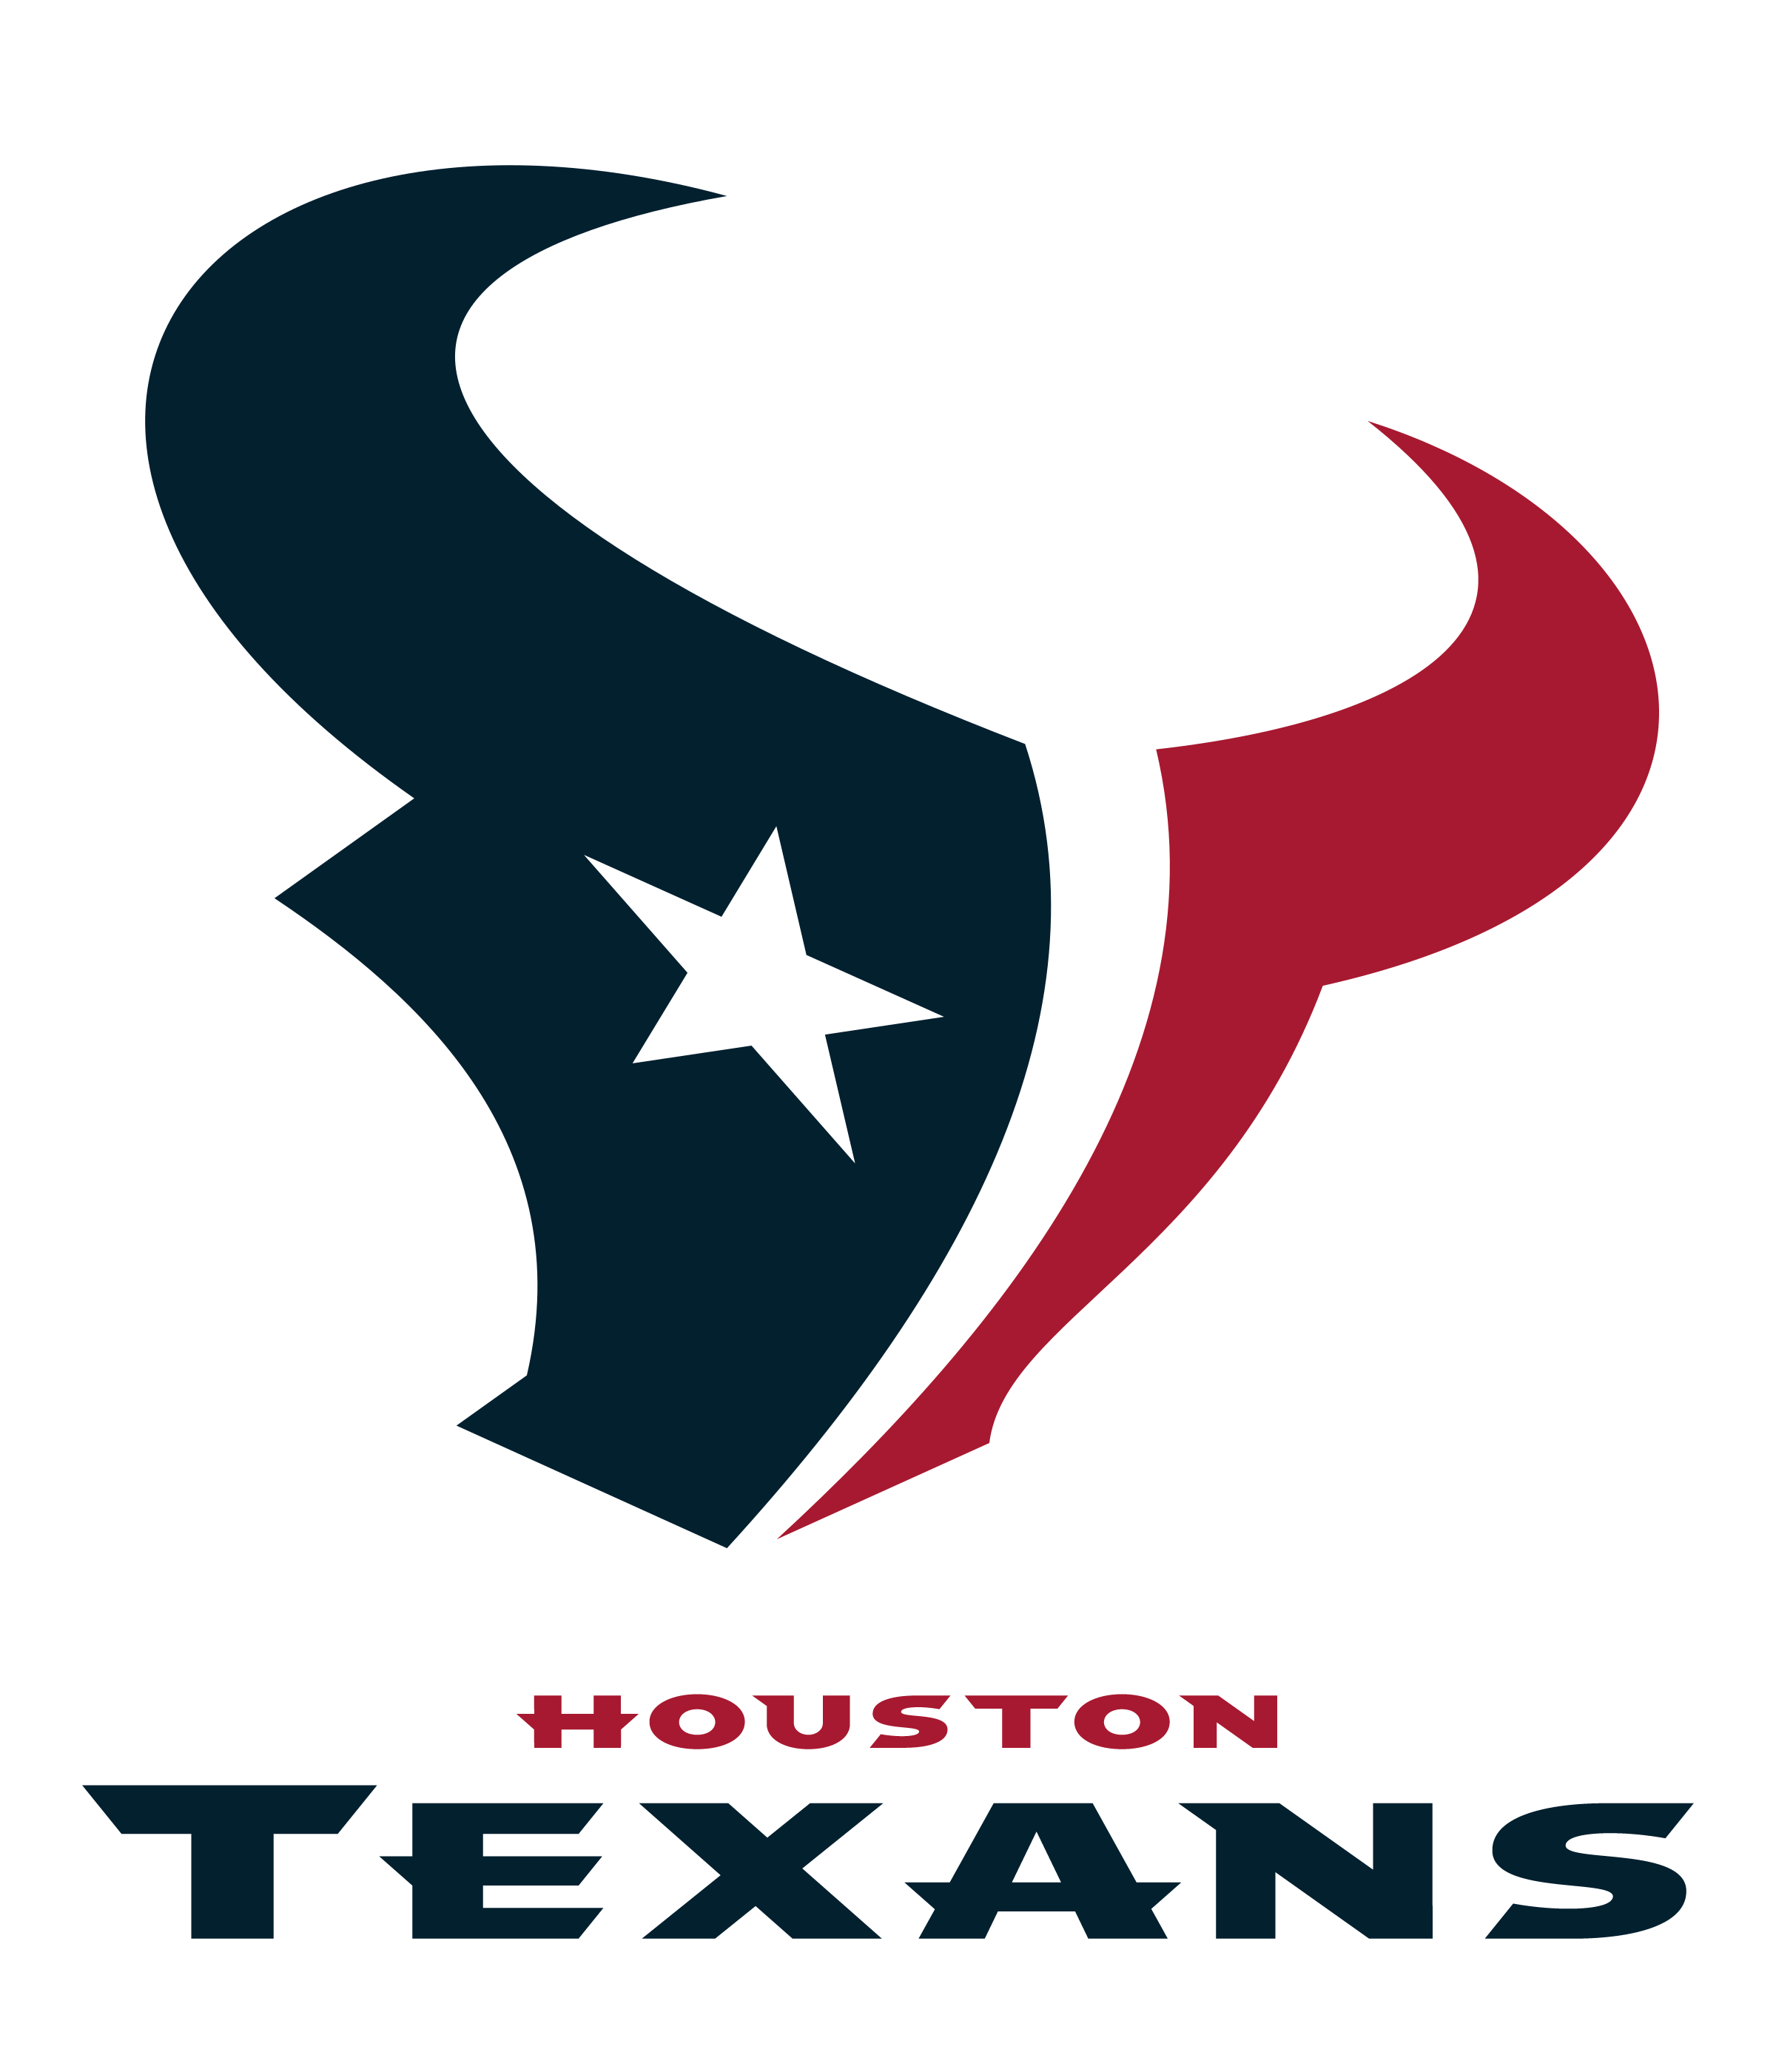 Houston Texans football logo